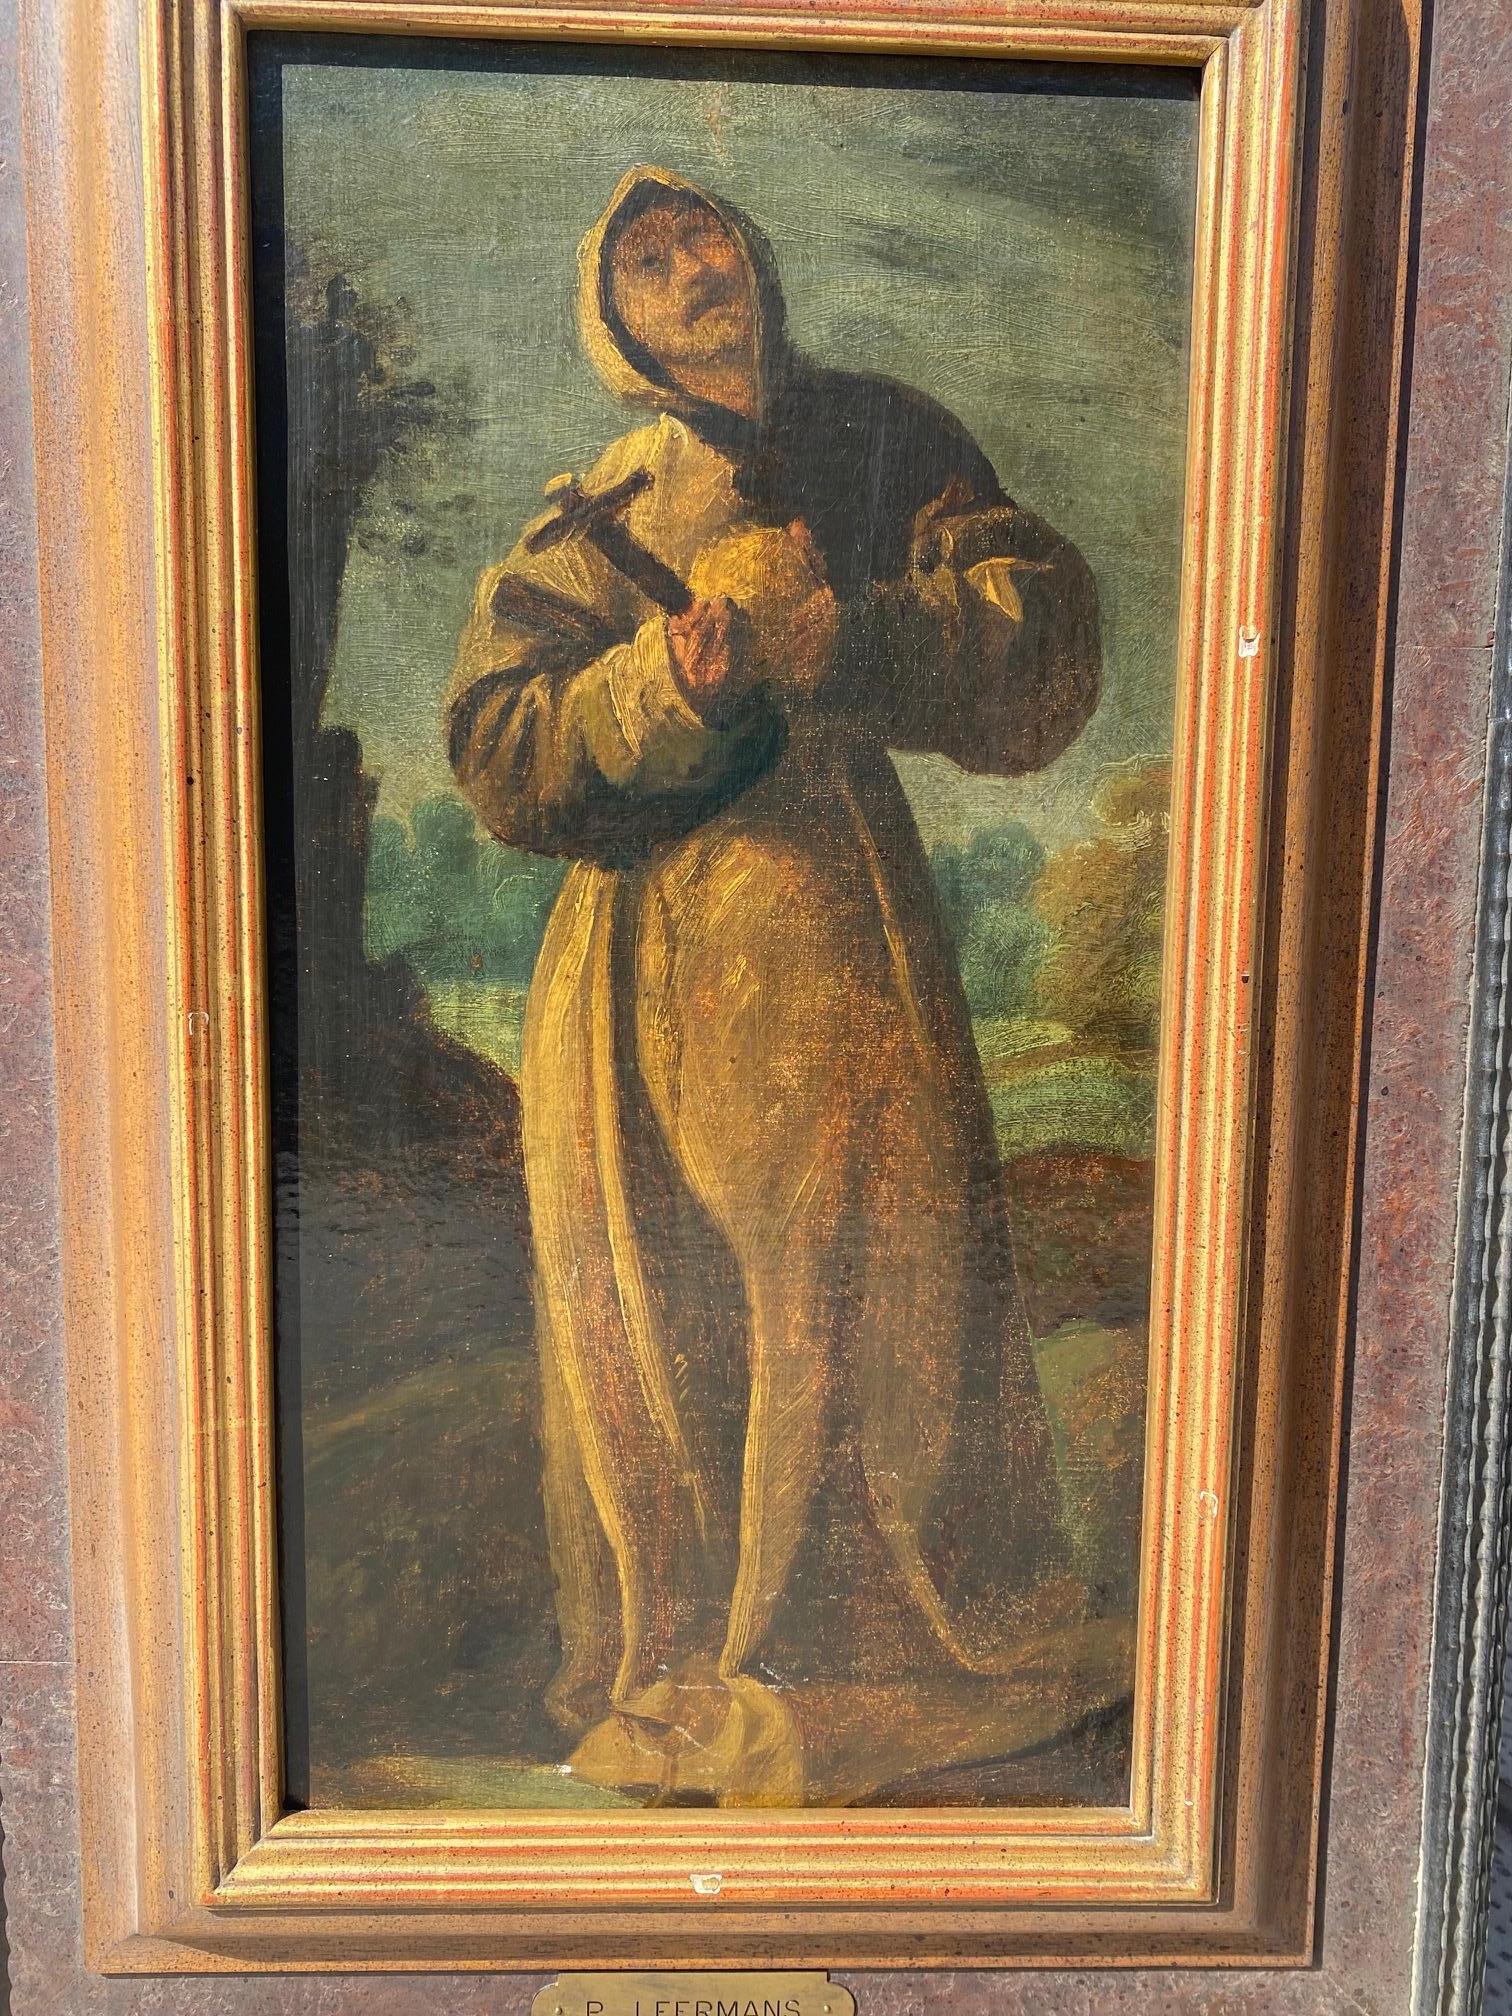 Portrait of a monk att. to Pieter Leermans - Oil on canvas 21x40 cm For Sale 2